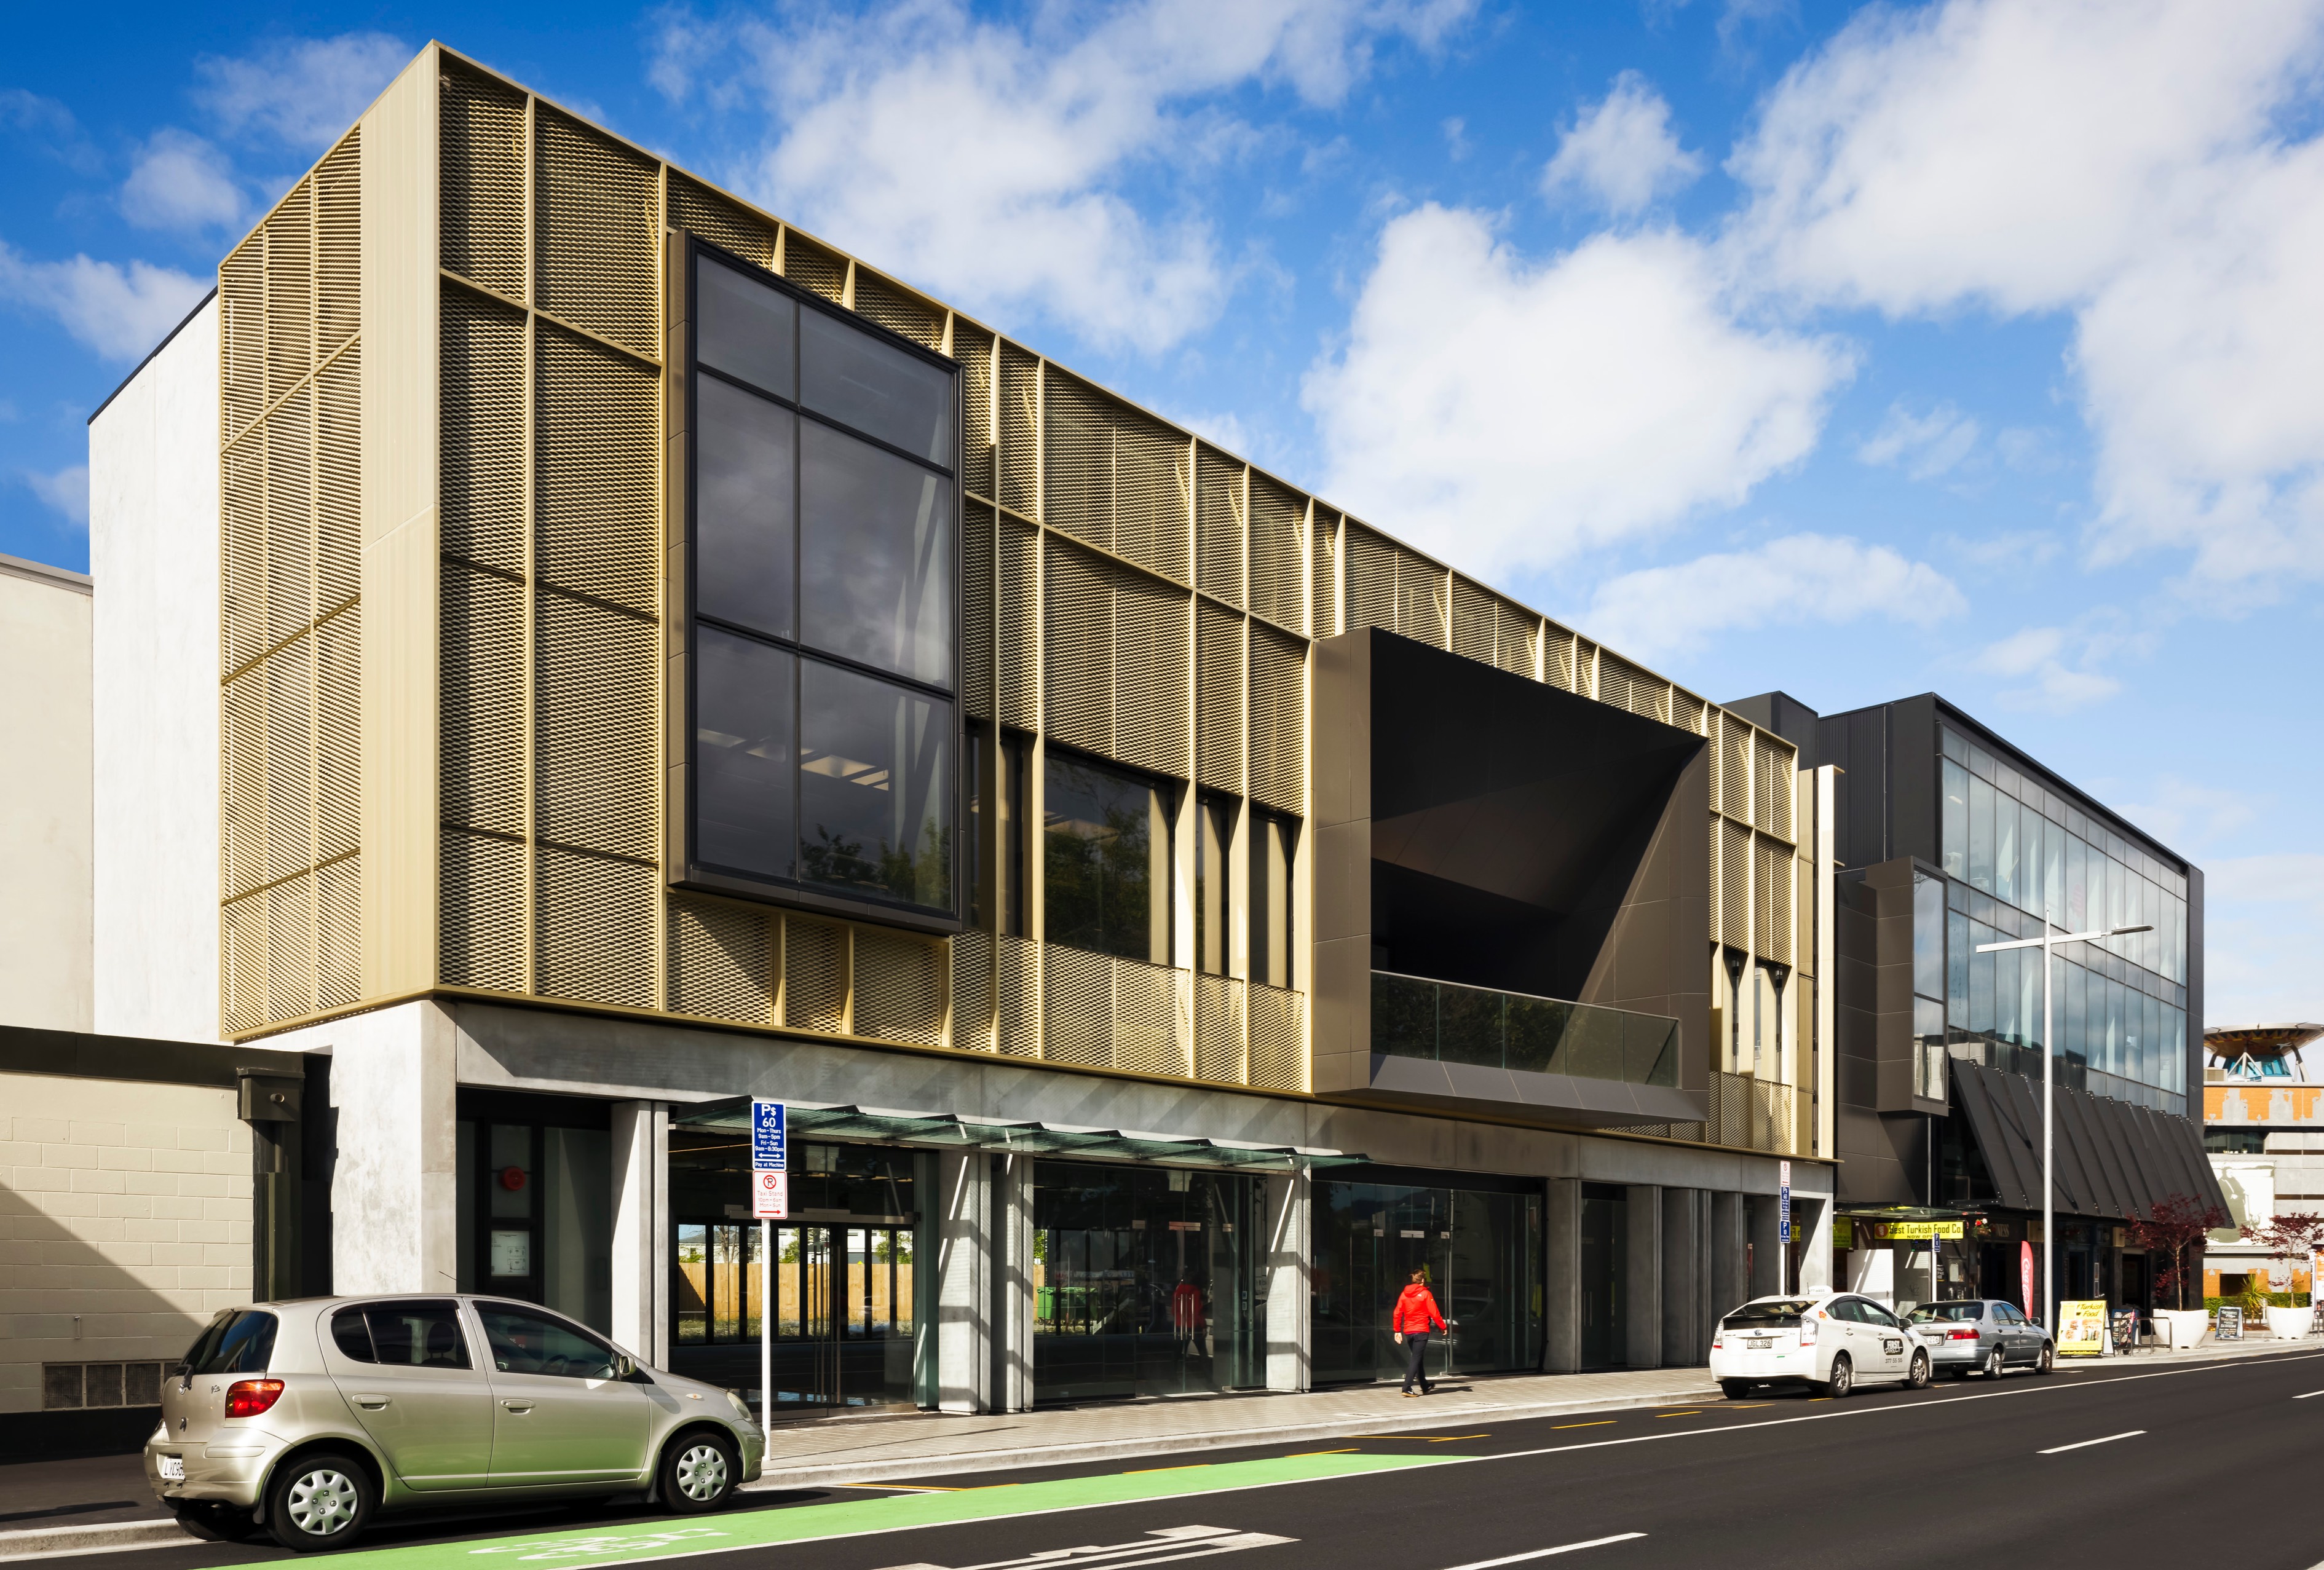 Exterior of Victoria Street building looking towards Christchurch Casino